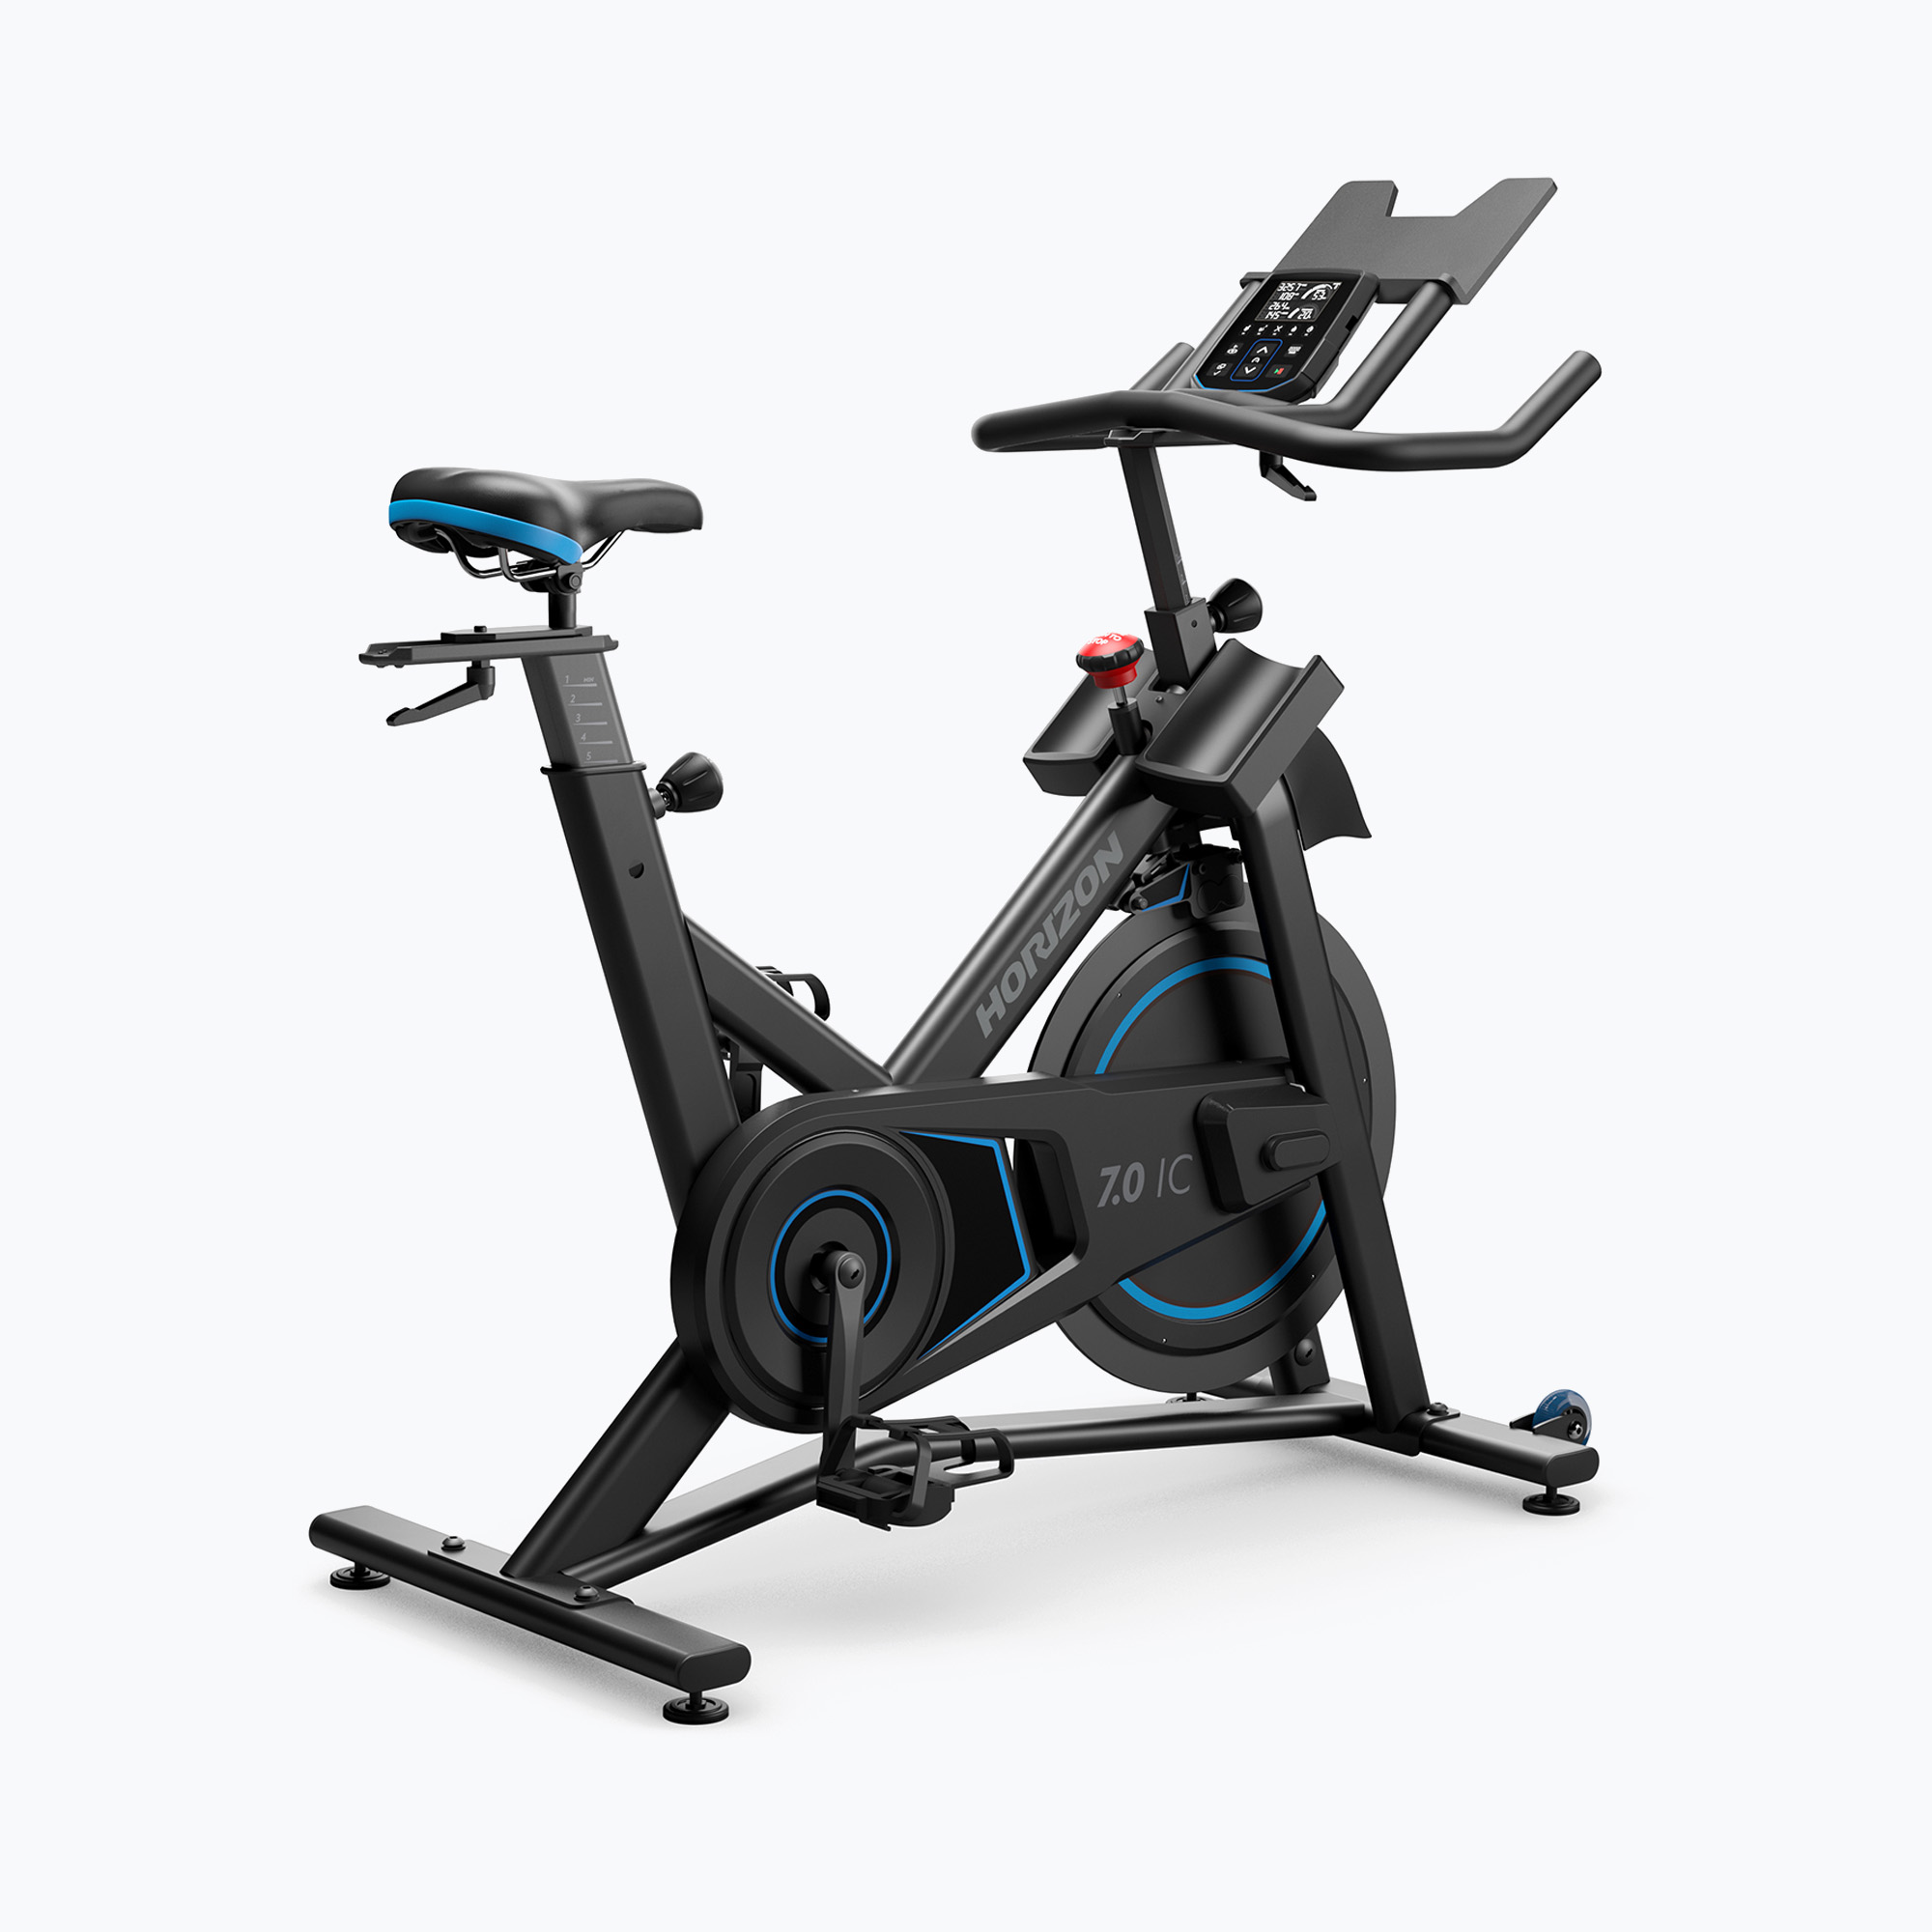 Horizon Fitness Indoor Cycle 7.0 IC spinningový bicykel